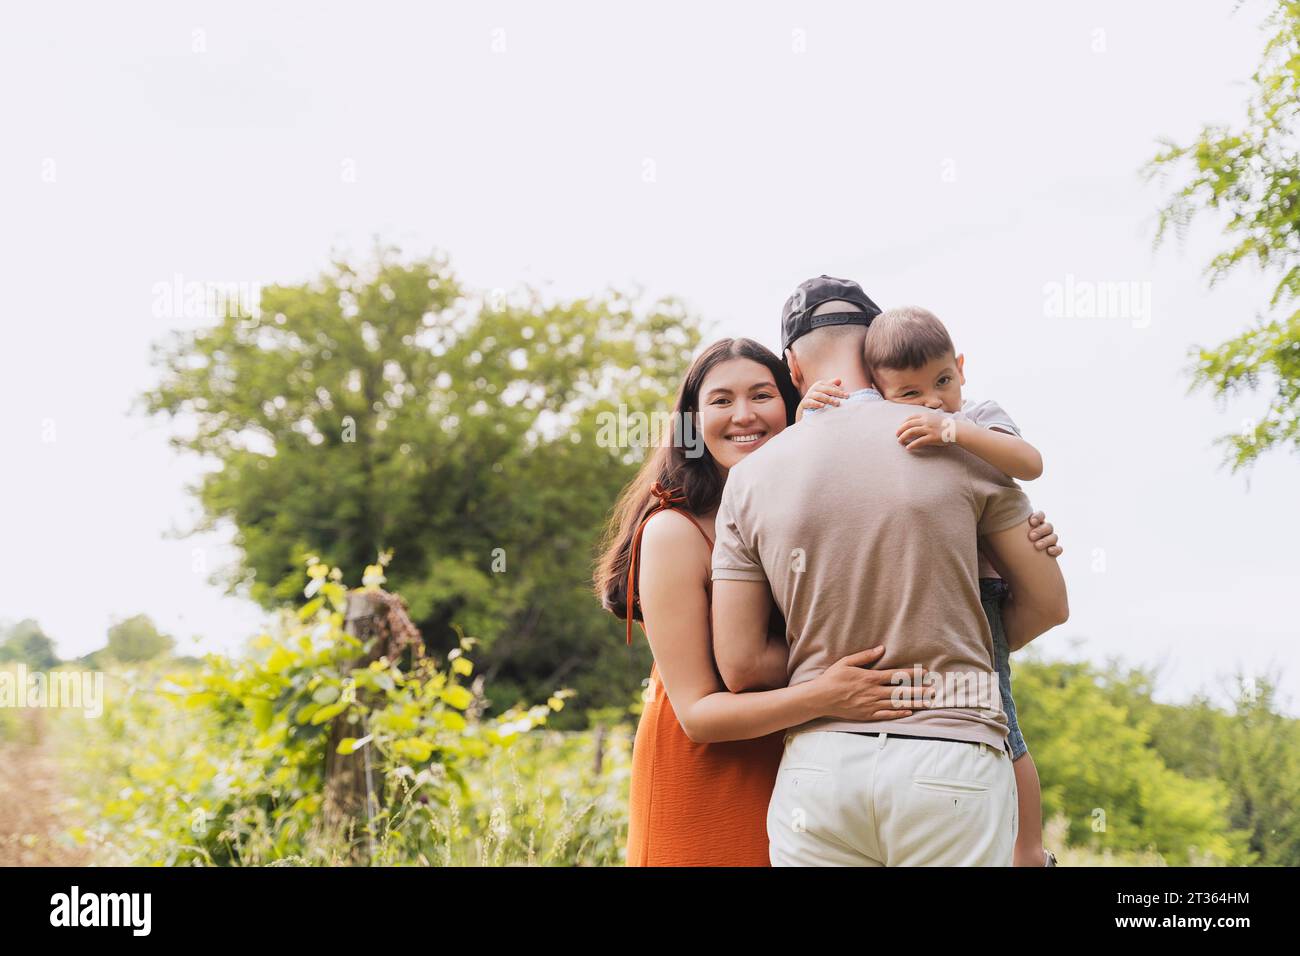 Smiling woman hugging family near plants Stock Photo